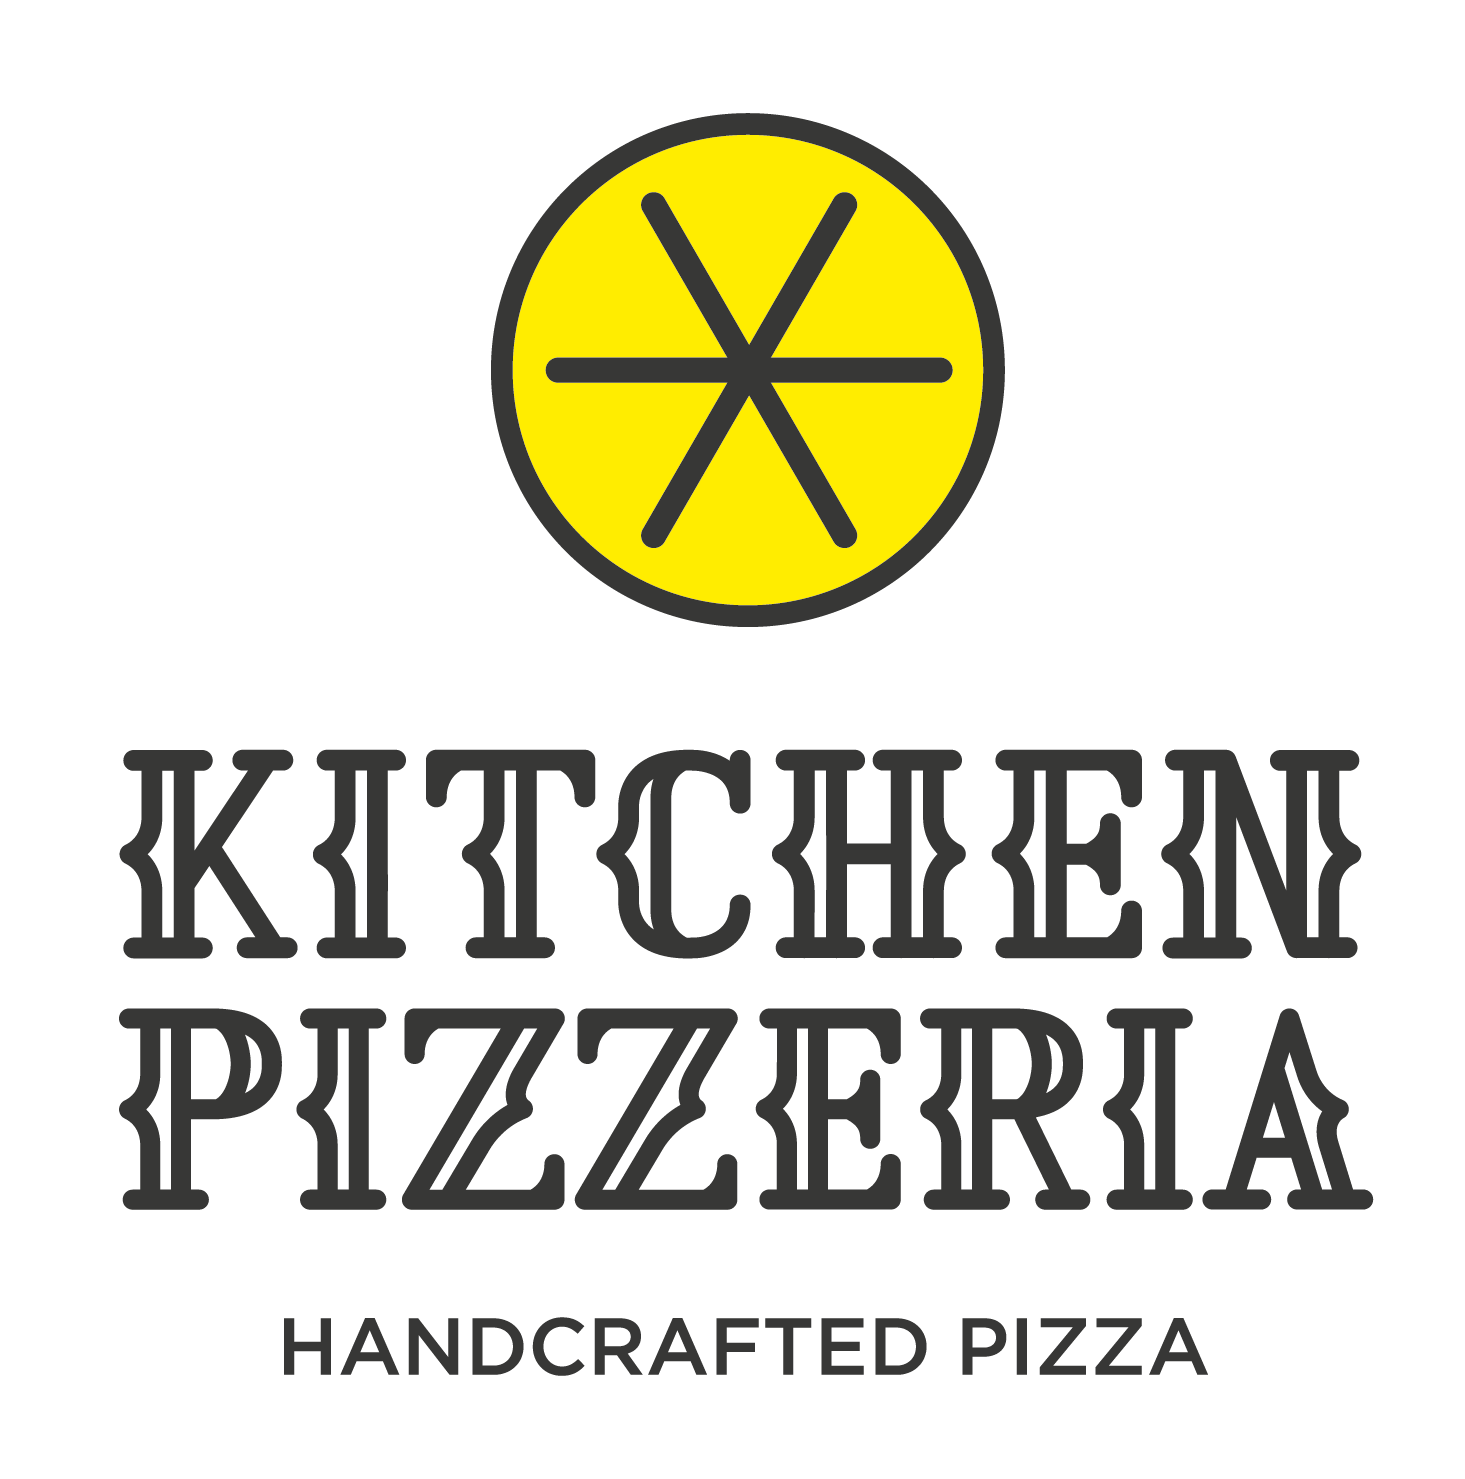 Kitchen Pizzeria